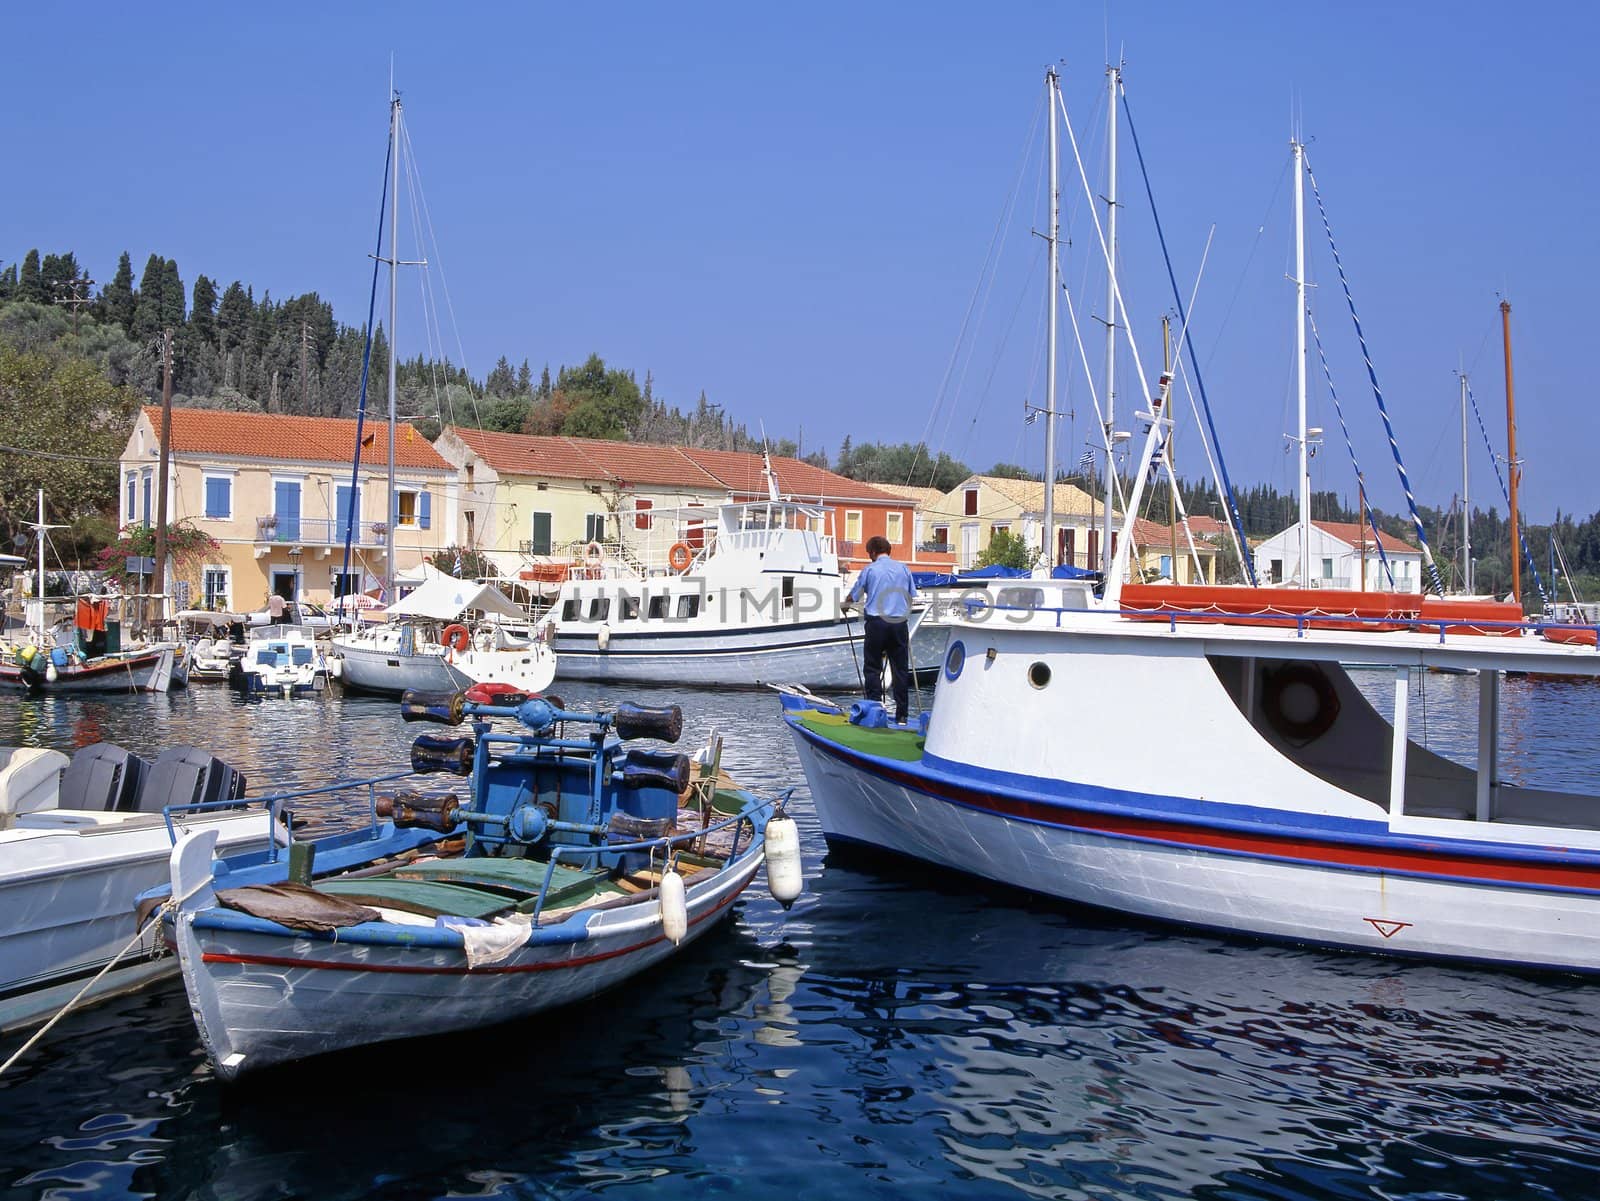 The harbour at Fiskardo on the greek island of Kefalonia